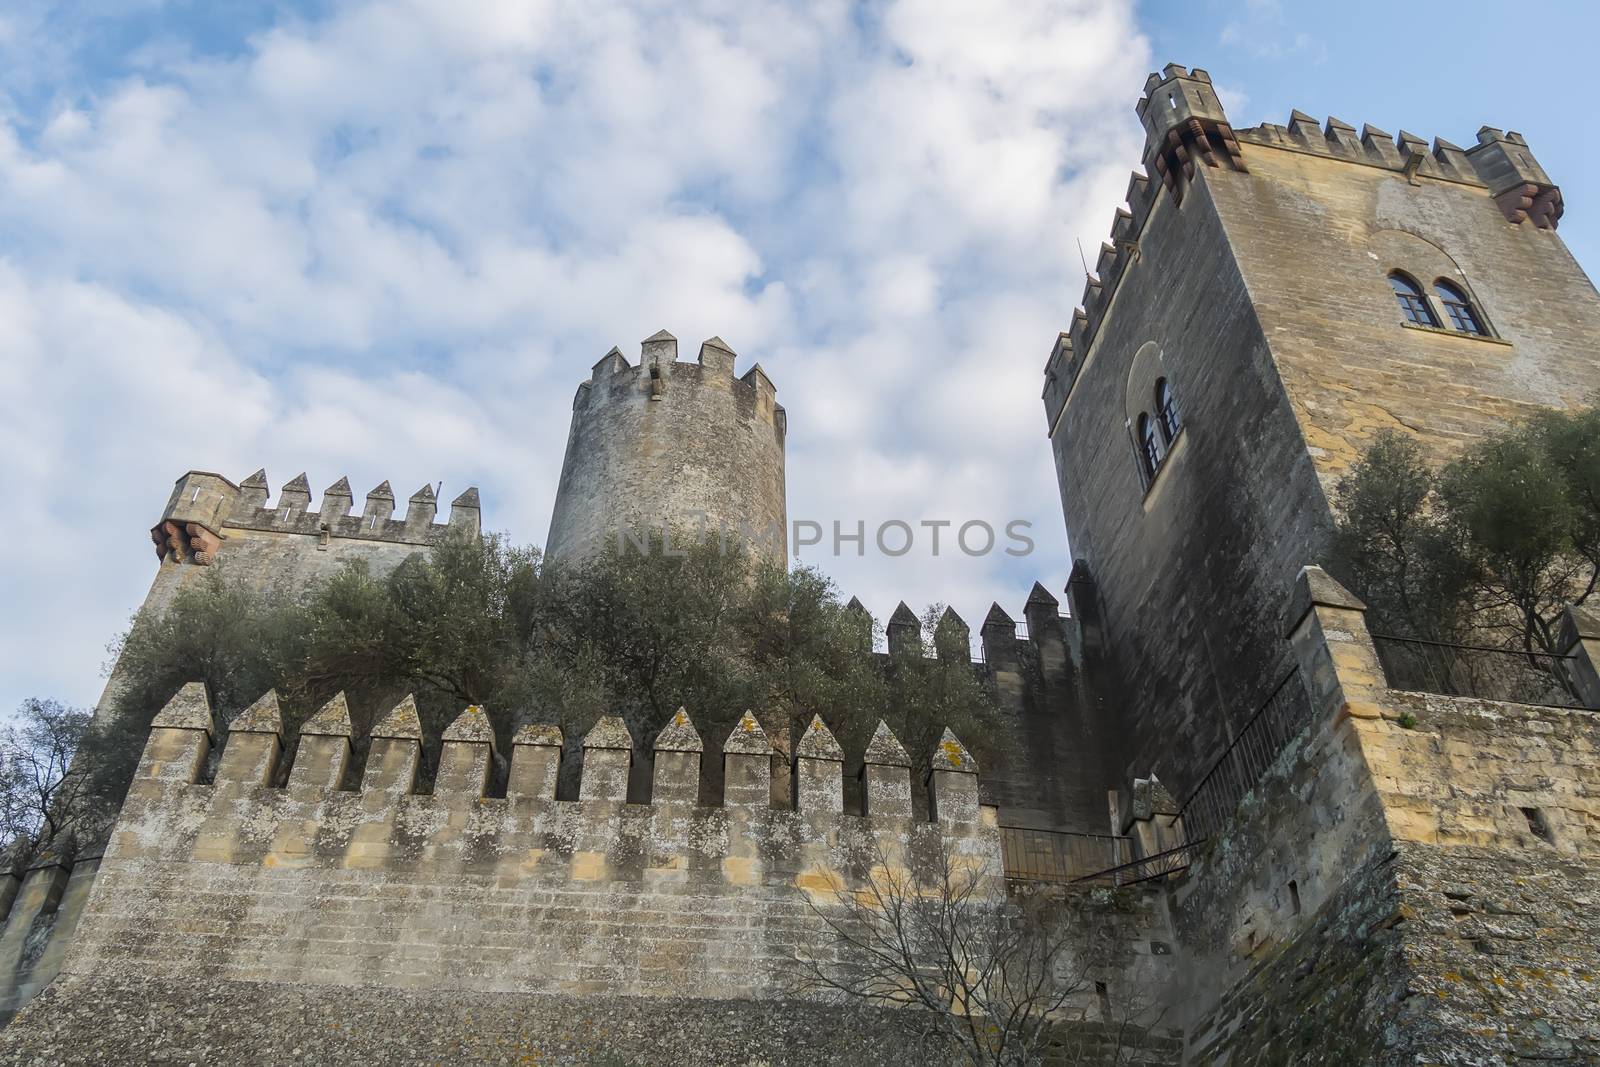 Almodovar del rio Castle, Cordoba, Spain